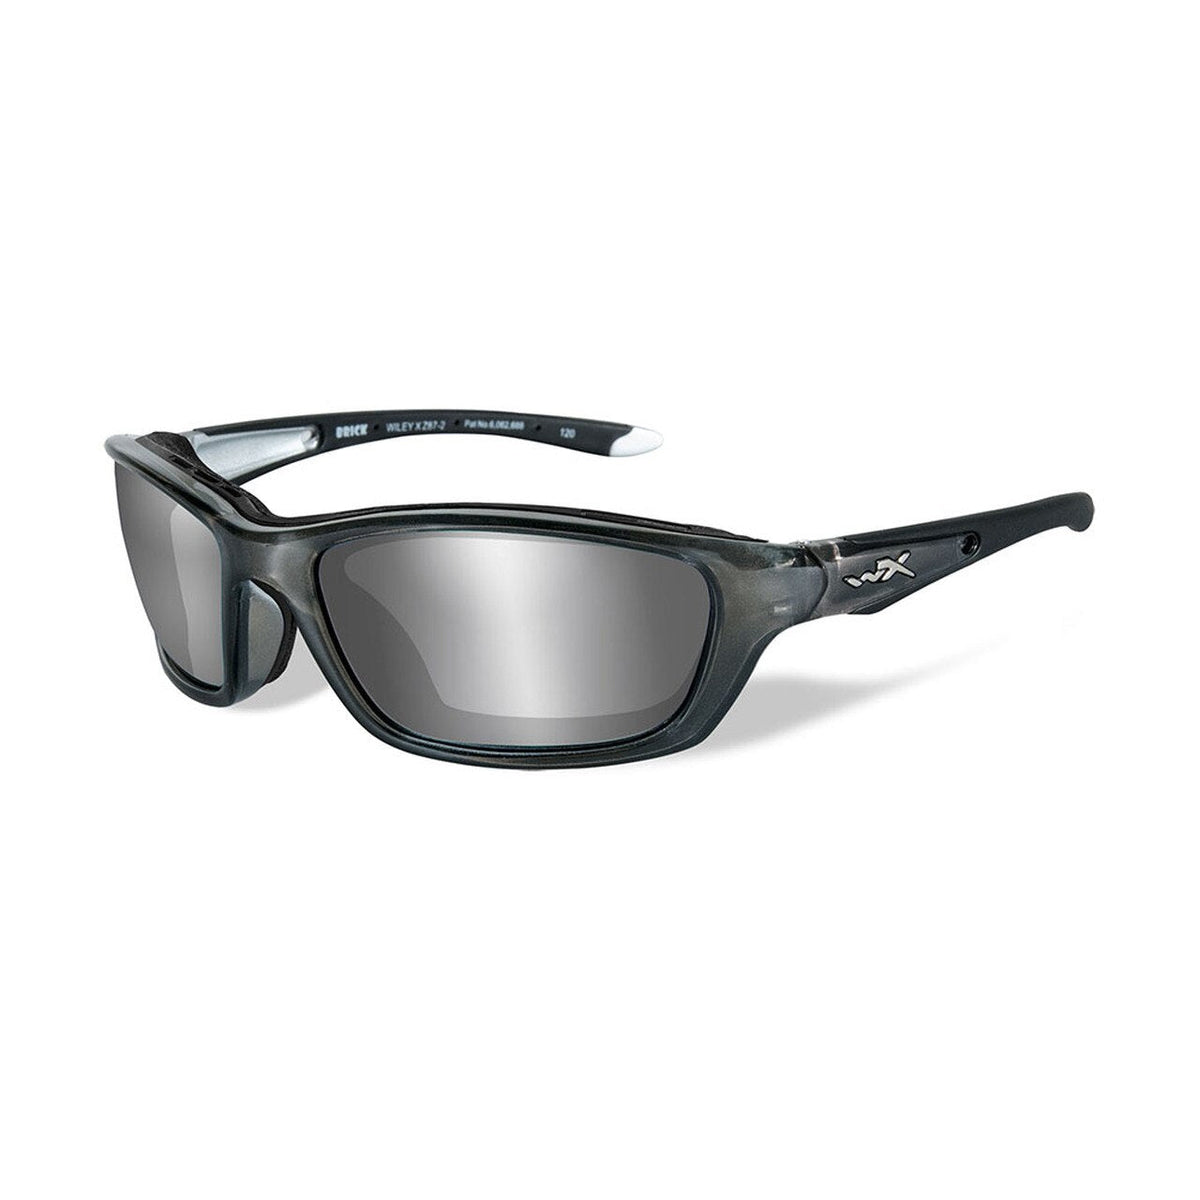 Wiley X Brick Sunglasses Silver Flash Lens Crystal Metallic Frame Eyewear Wiley X Tactical Gear Supplier Tactical Distributors Australia